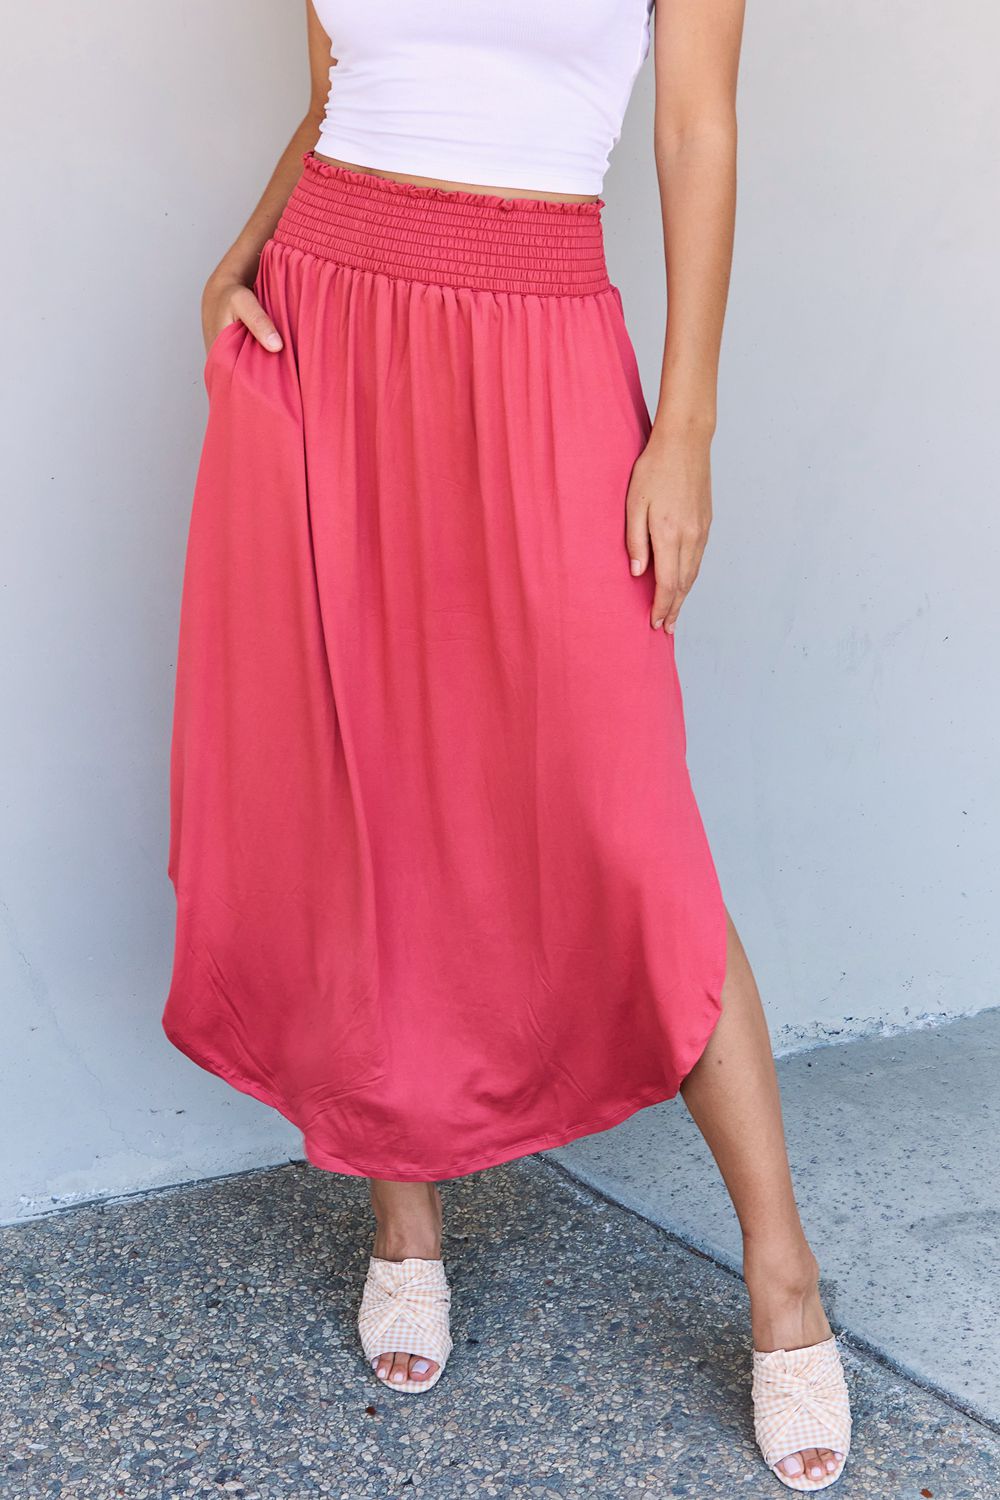 Full Size High Waist Scoop Hem Maxi Skirt in Hot Pink